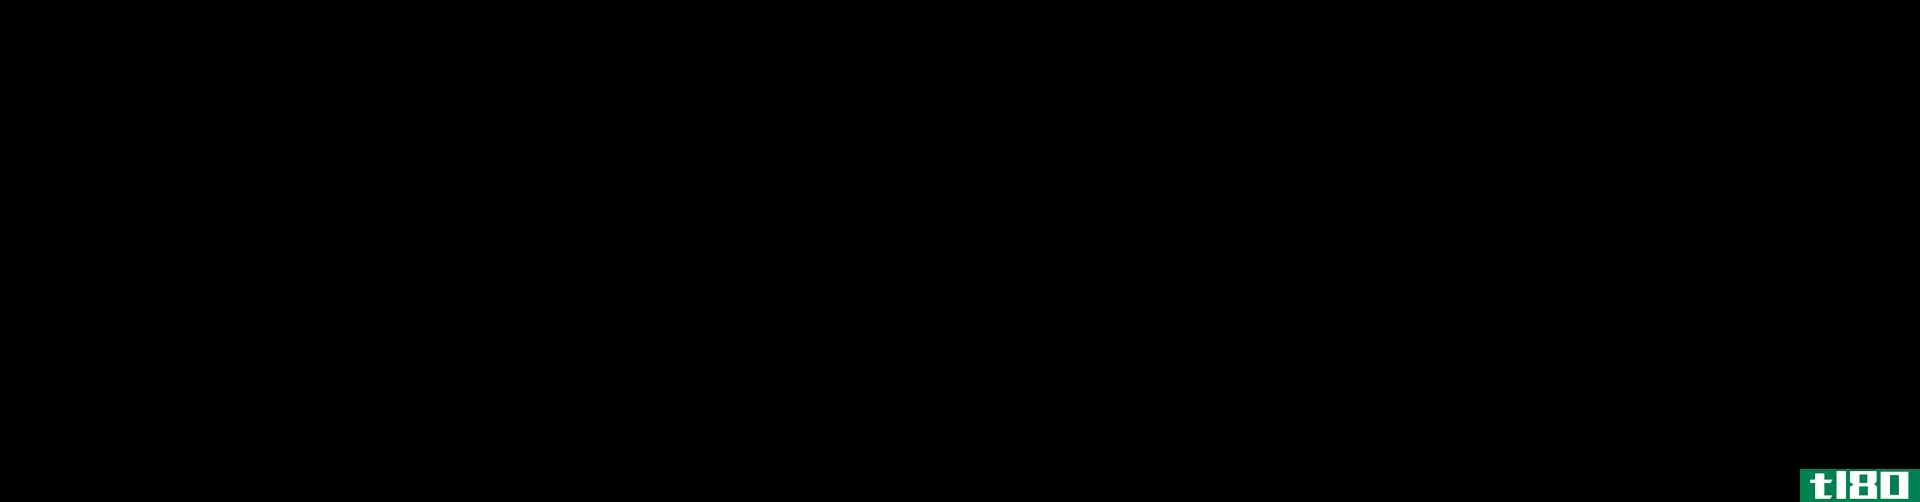 异构化(isomerization)和芳构化(aromatization)的区别